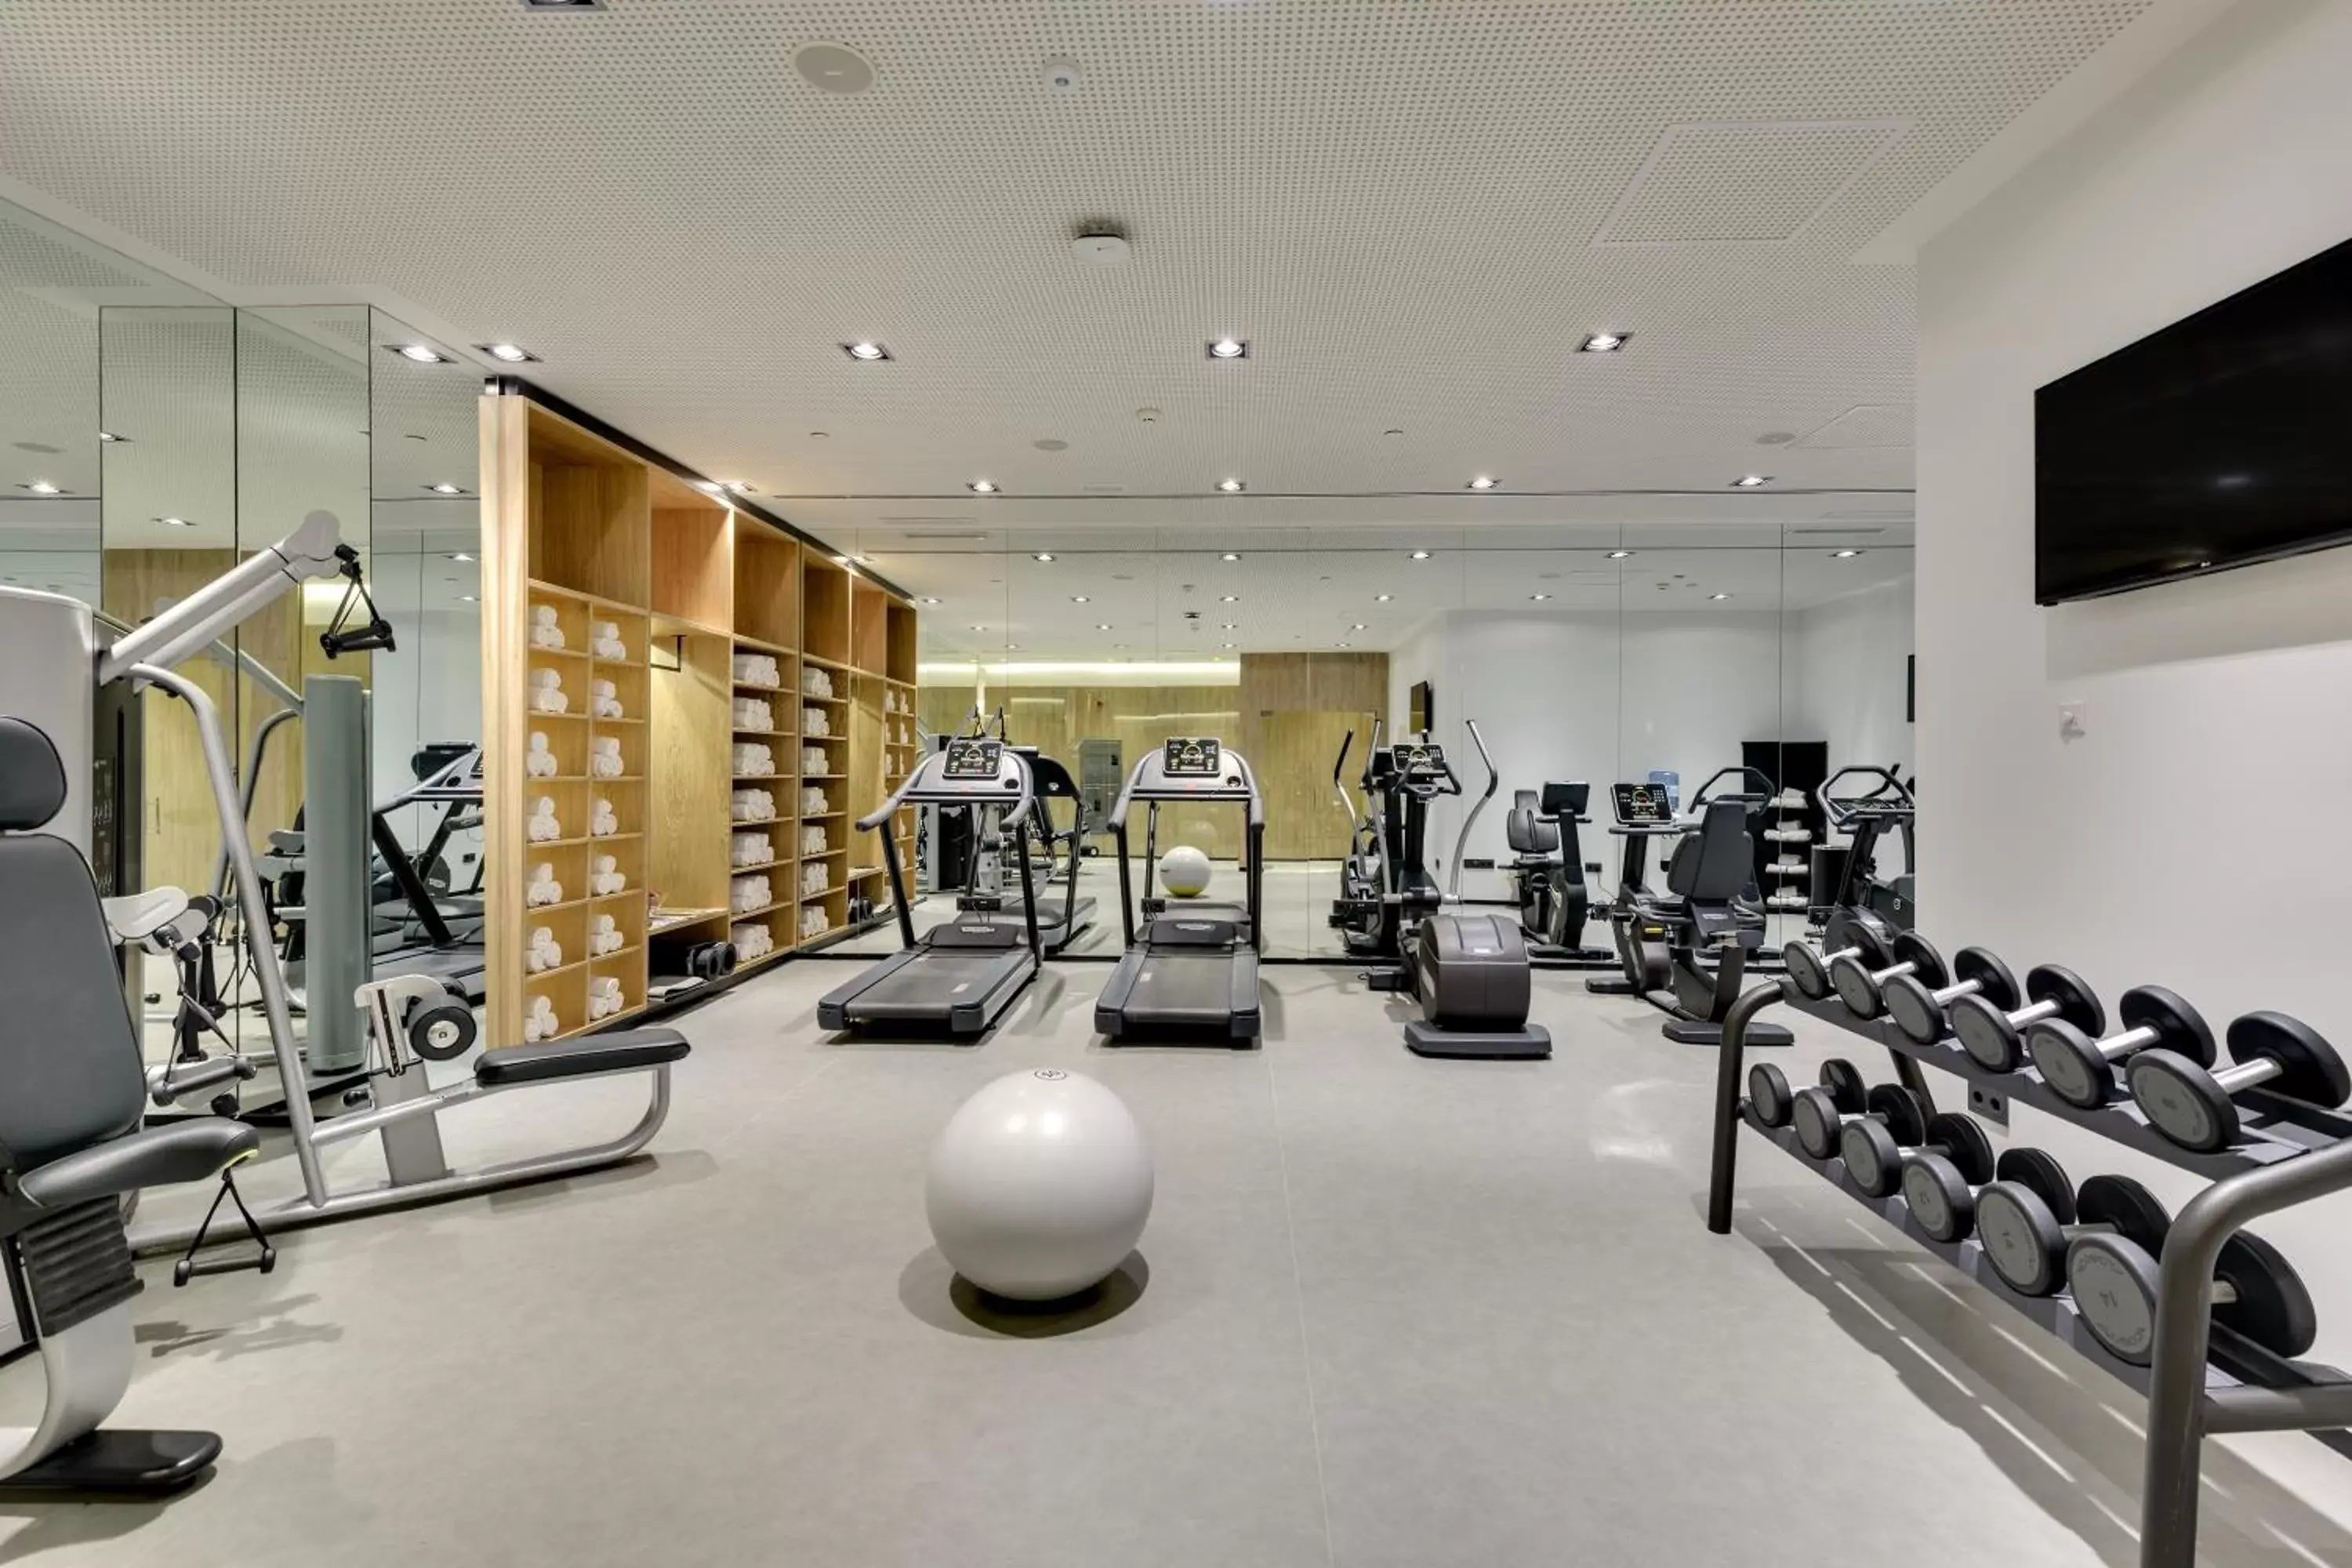 Fitness centre/facilities, Fitness Center/Facilities in Melia Madrid Serrano